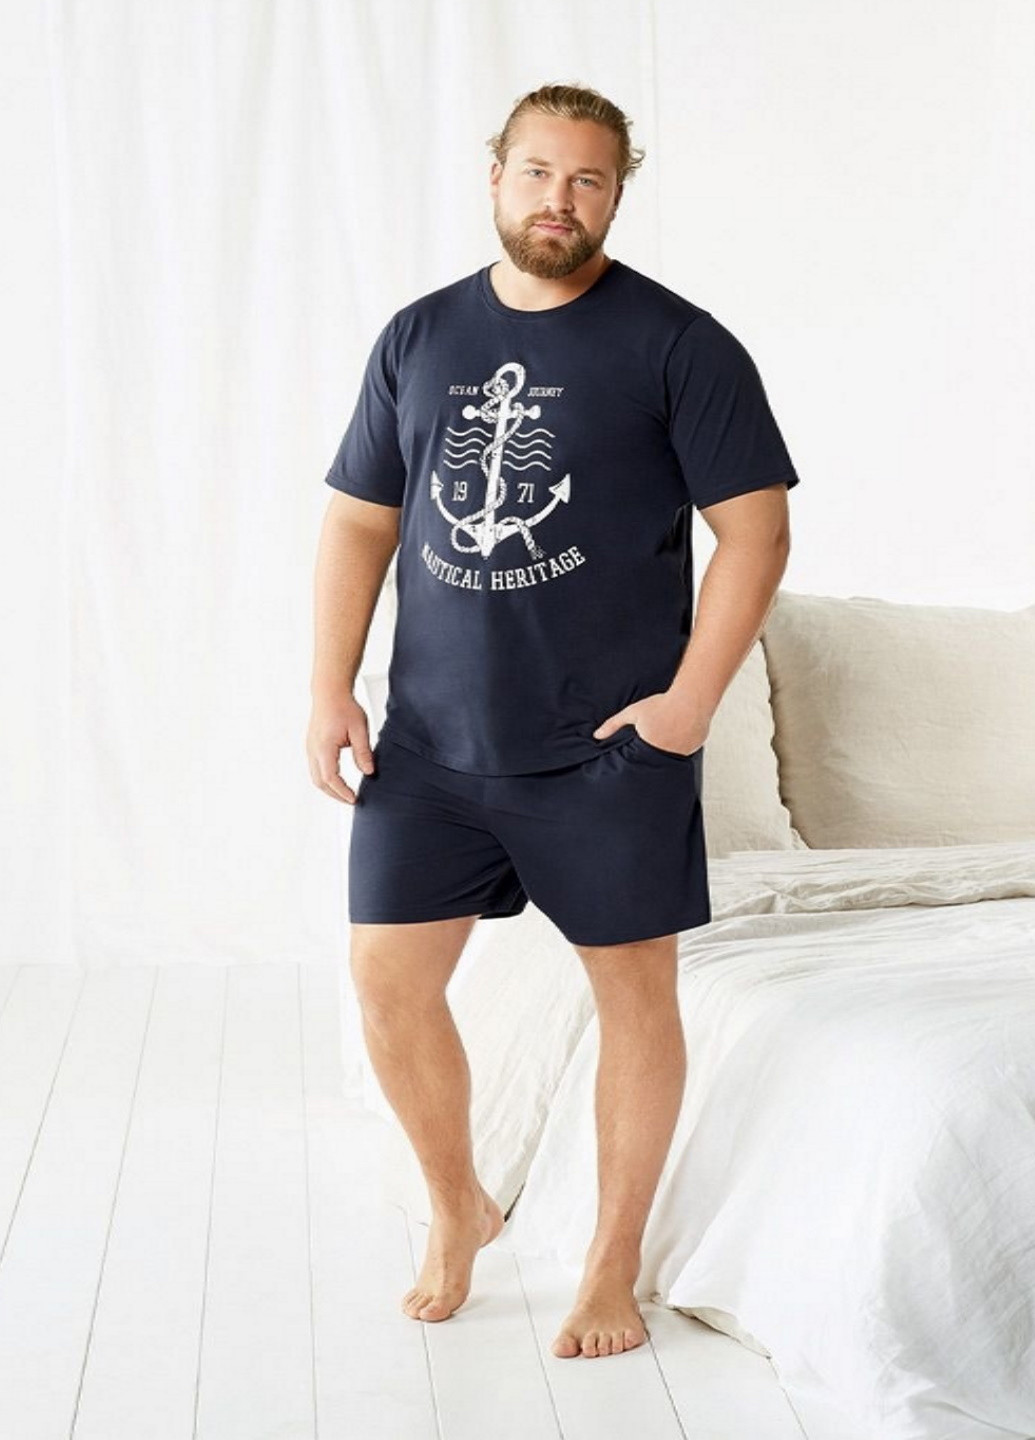 Пижама (футболка, шорты) Livergy футболка + шорты рисунок тёмно-синяя домашняя трикотаж, хлопок